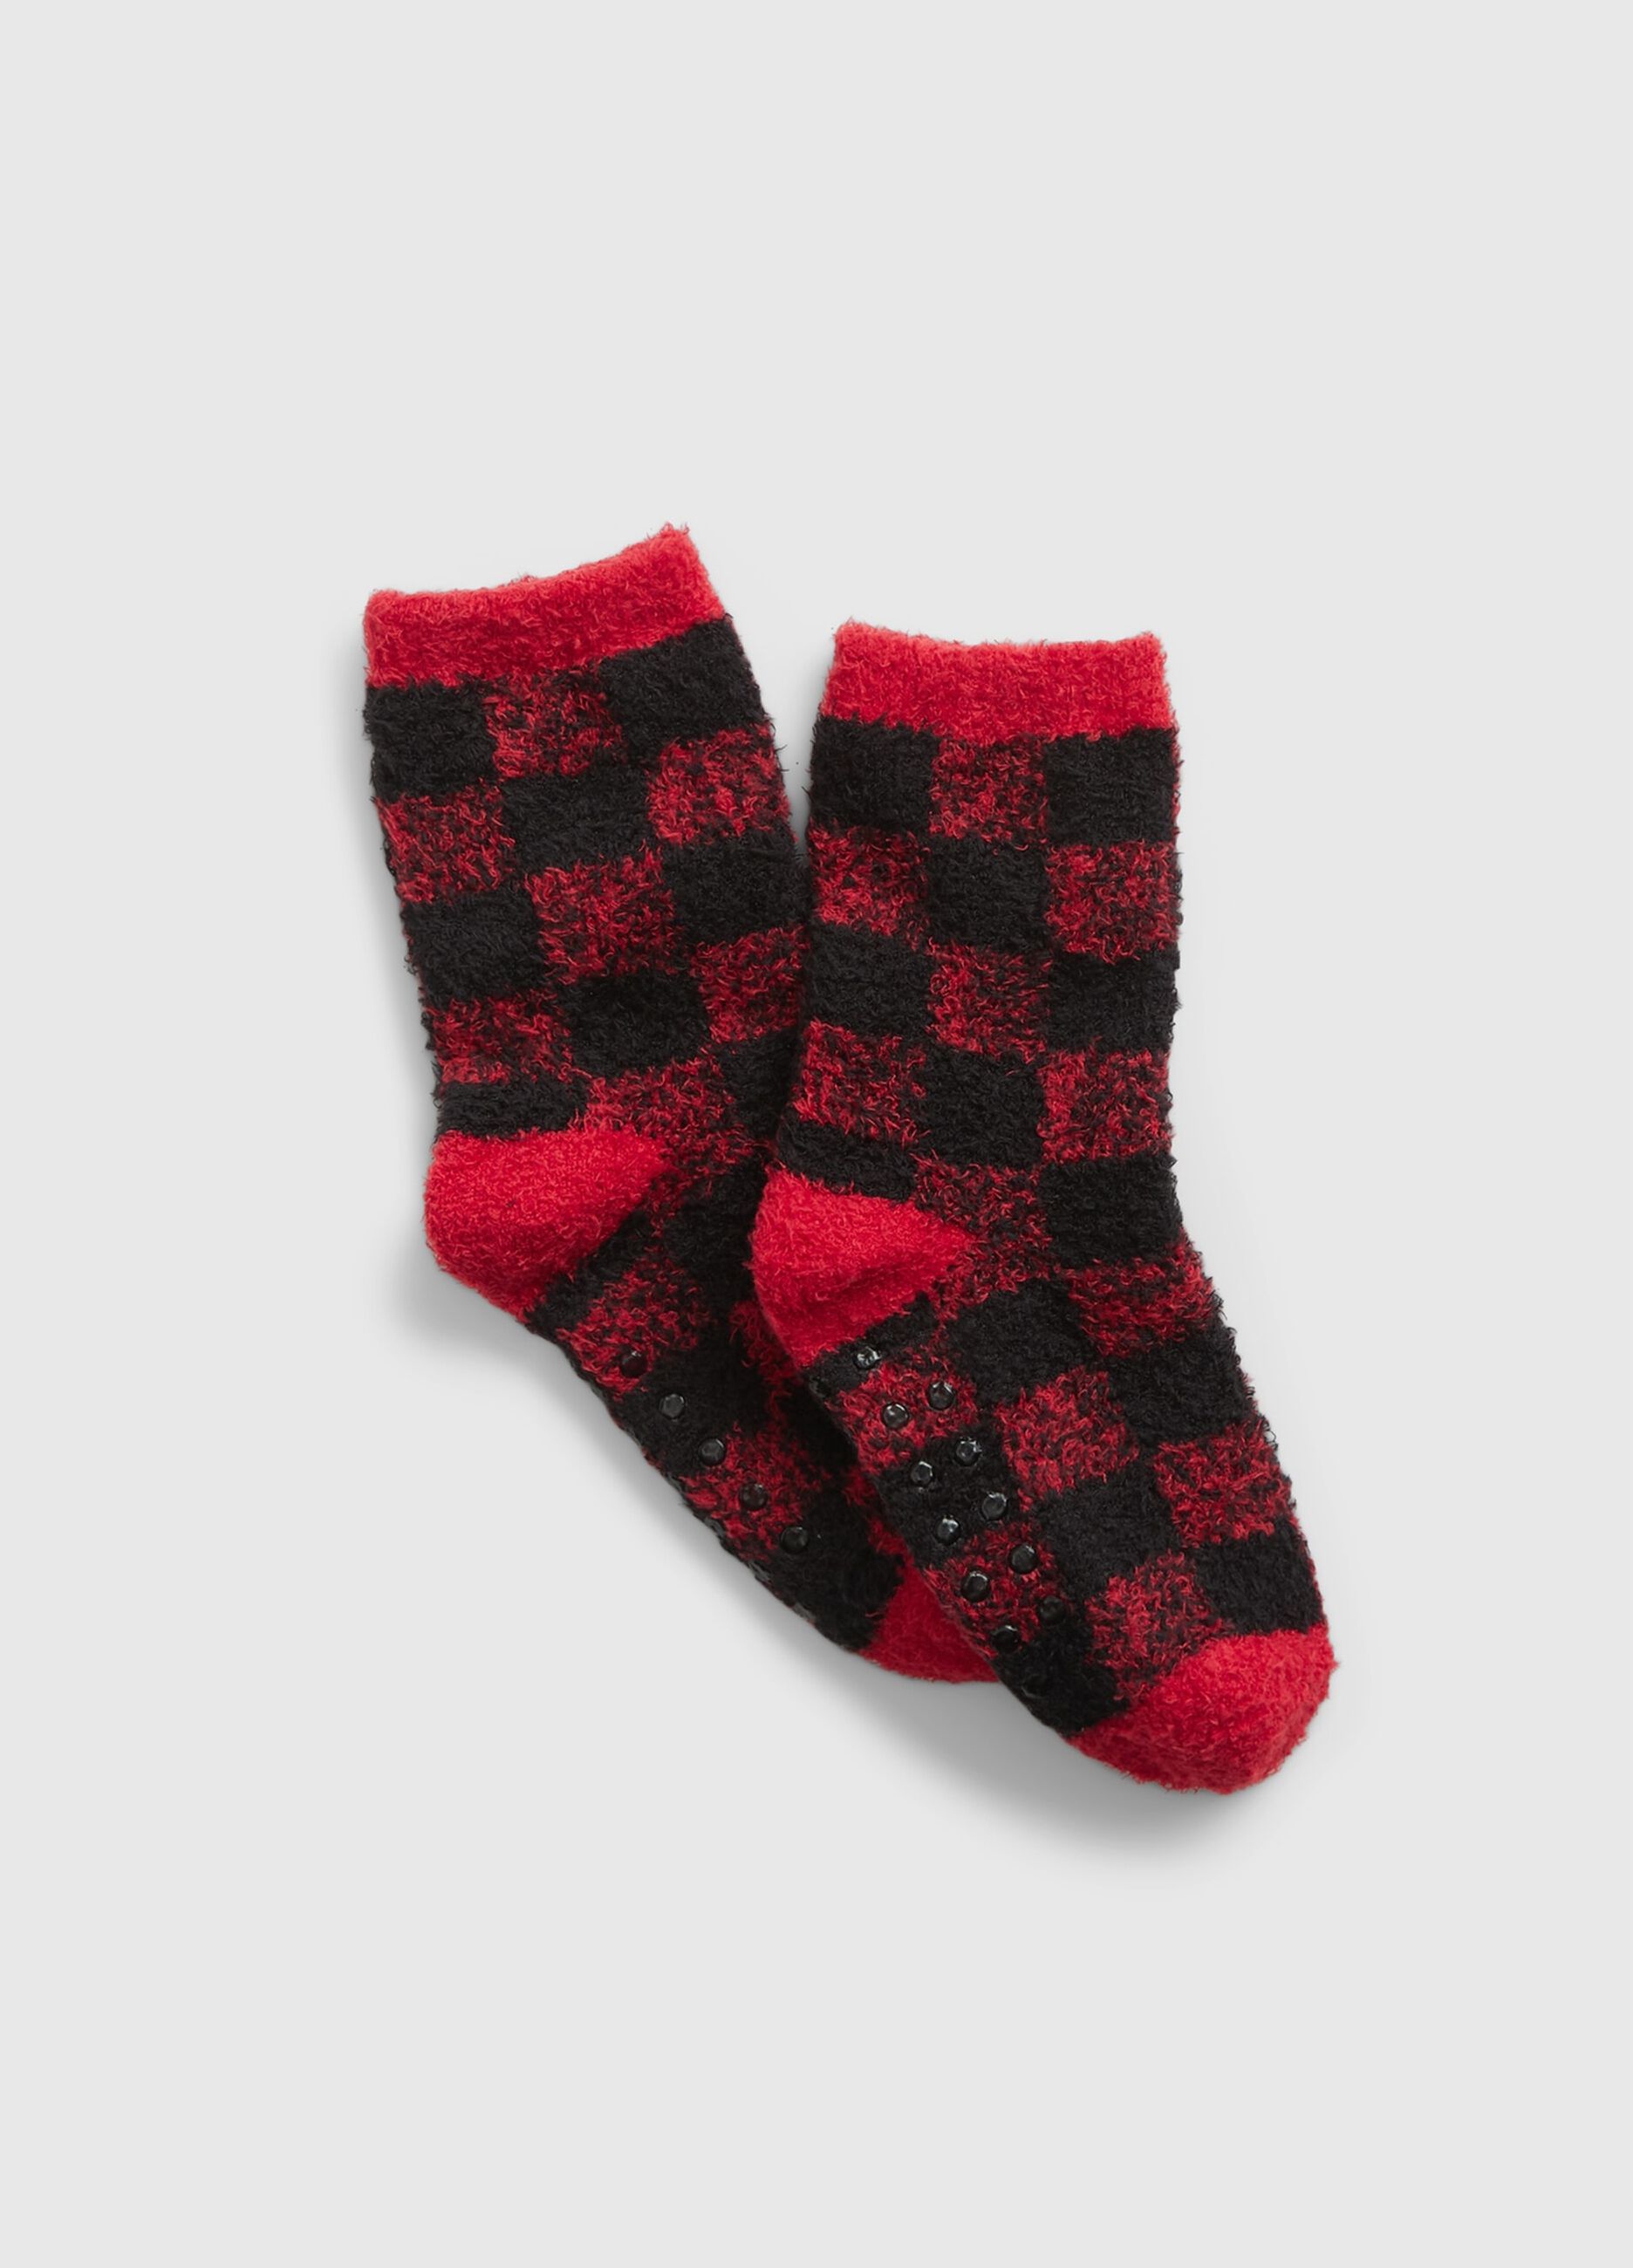 Slipper socks with check pattern